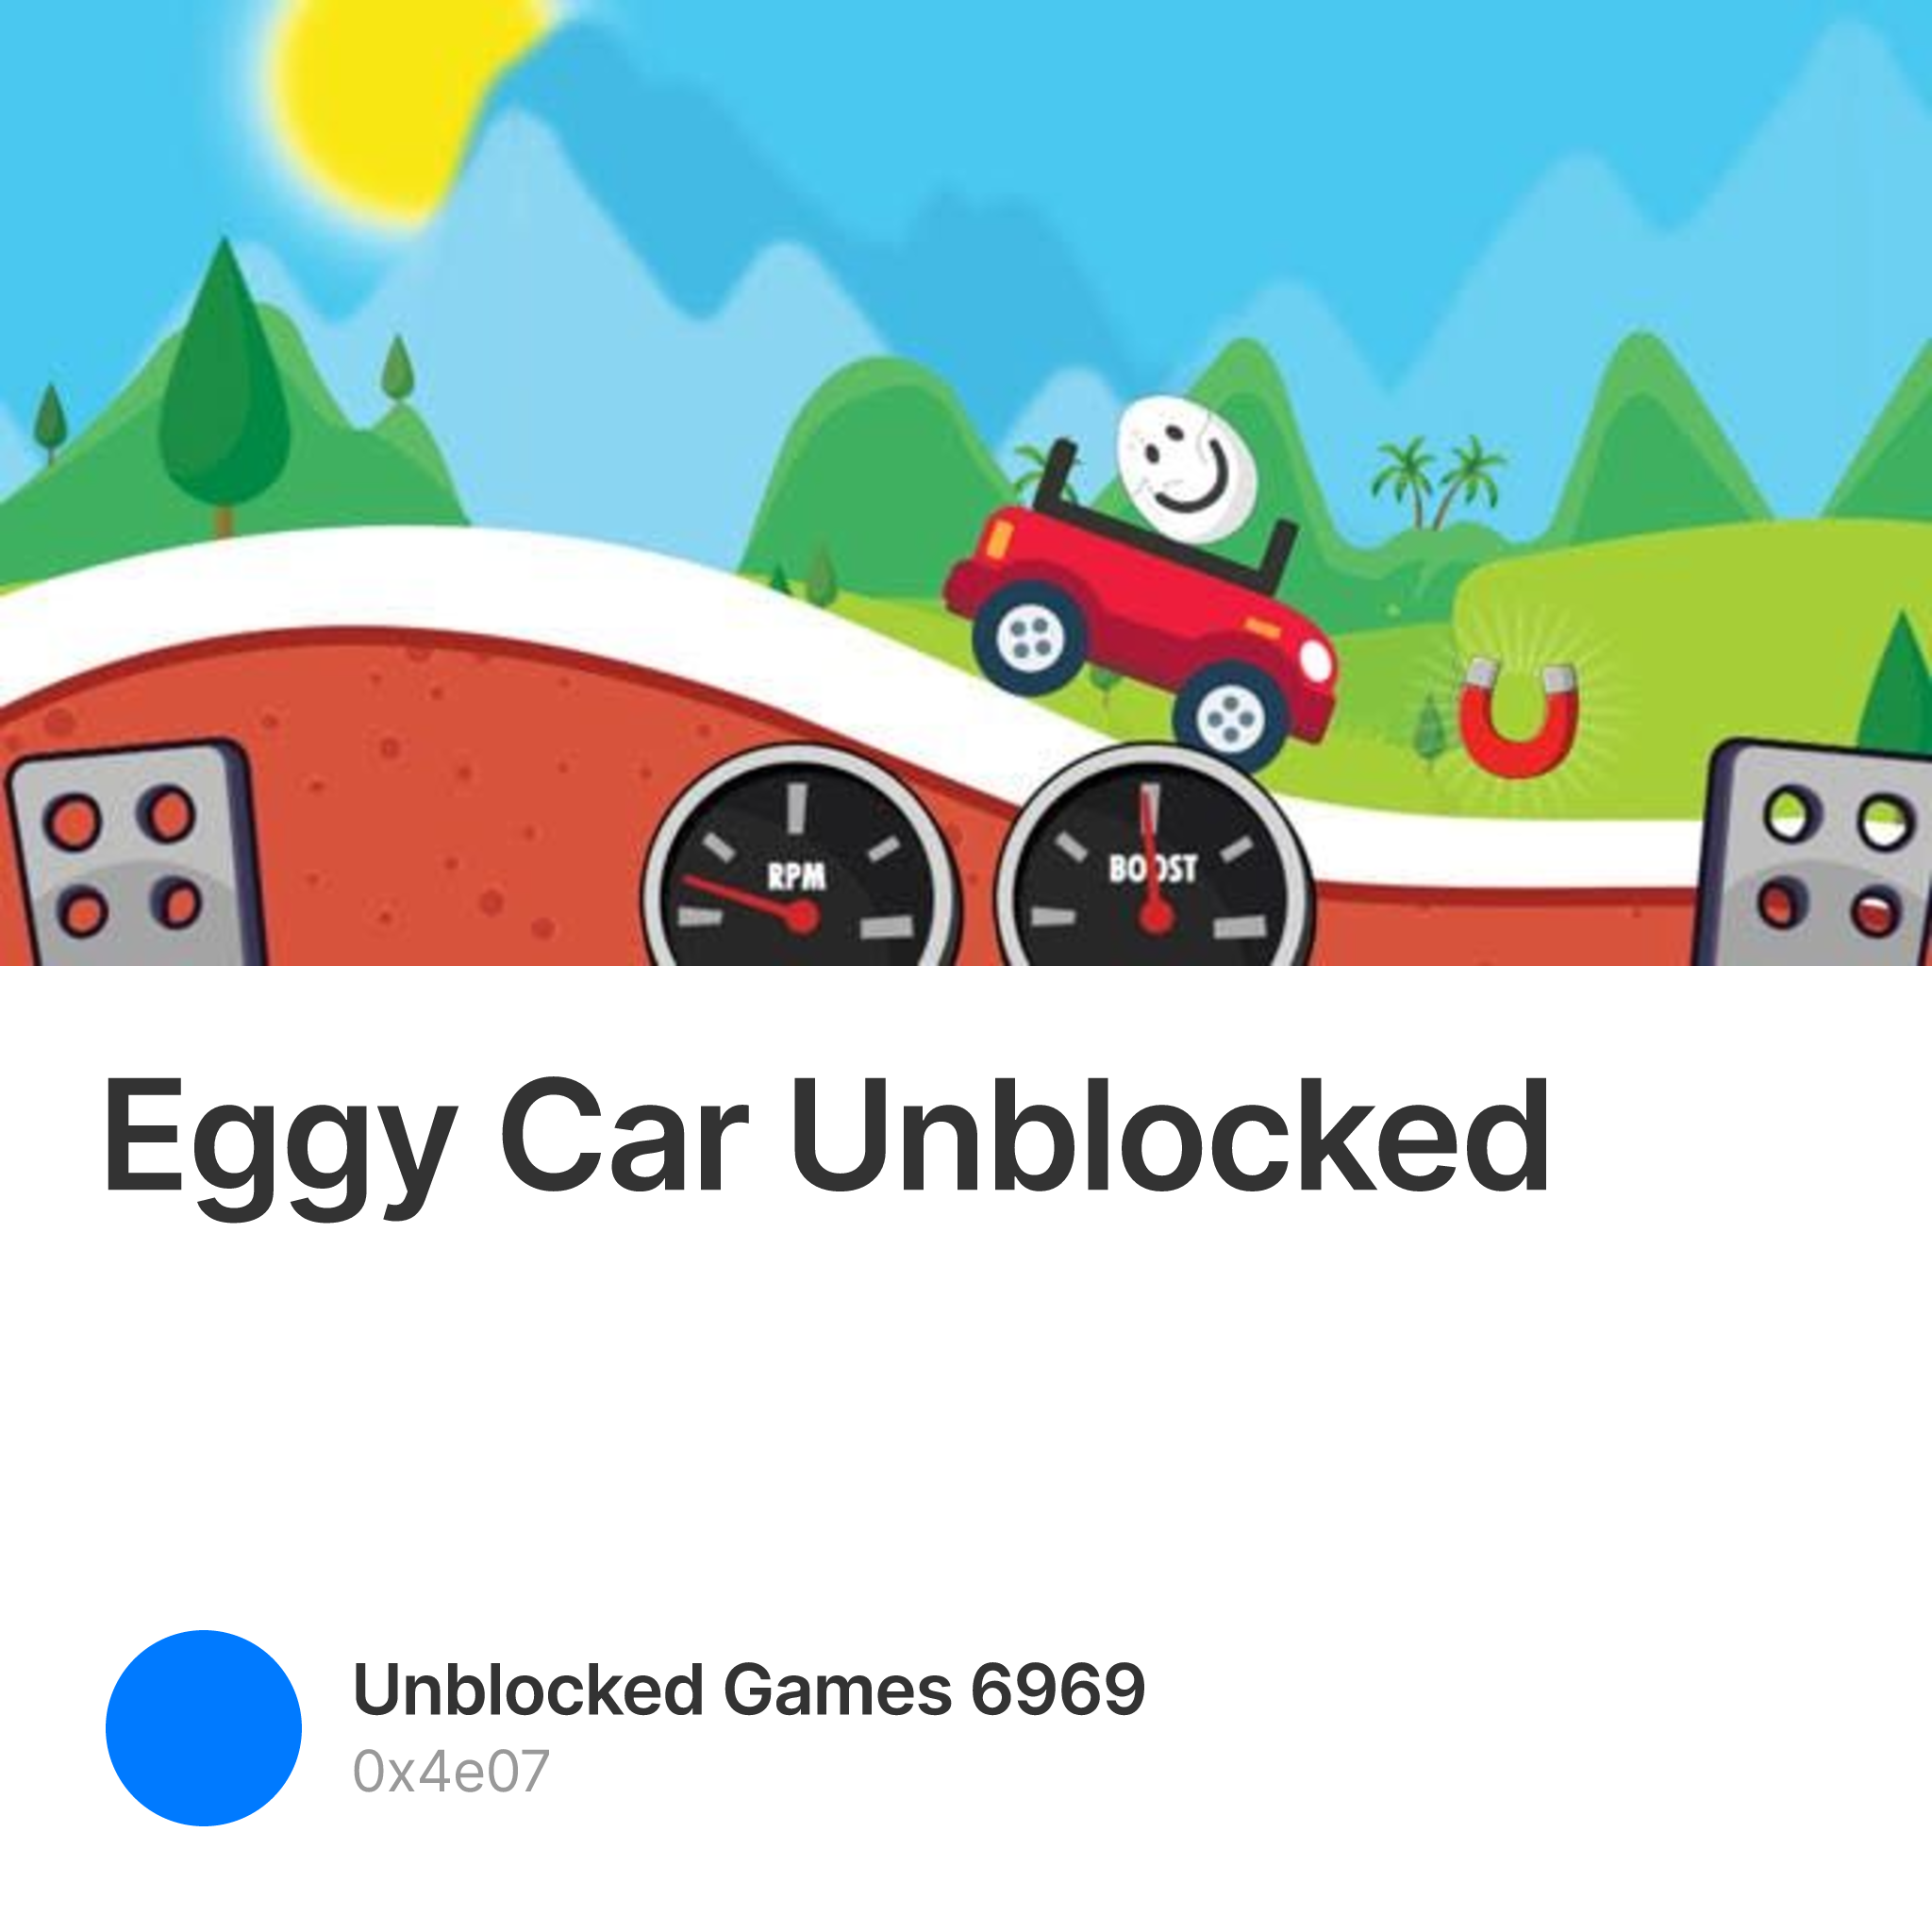 Unblocked Games - Eggy Car